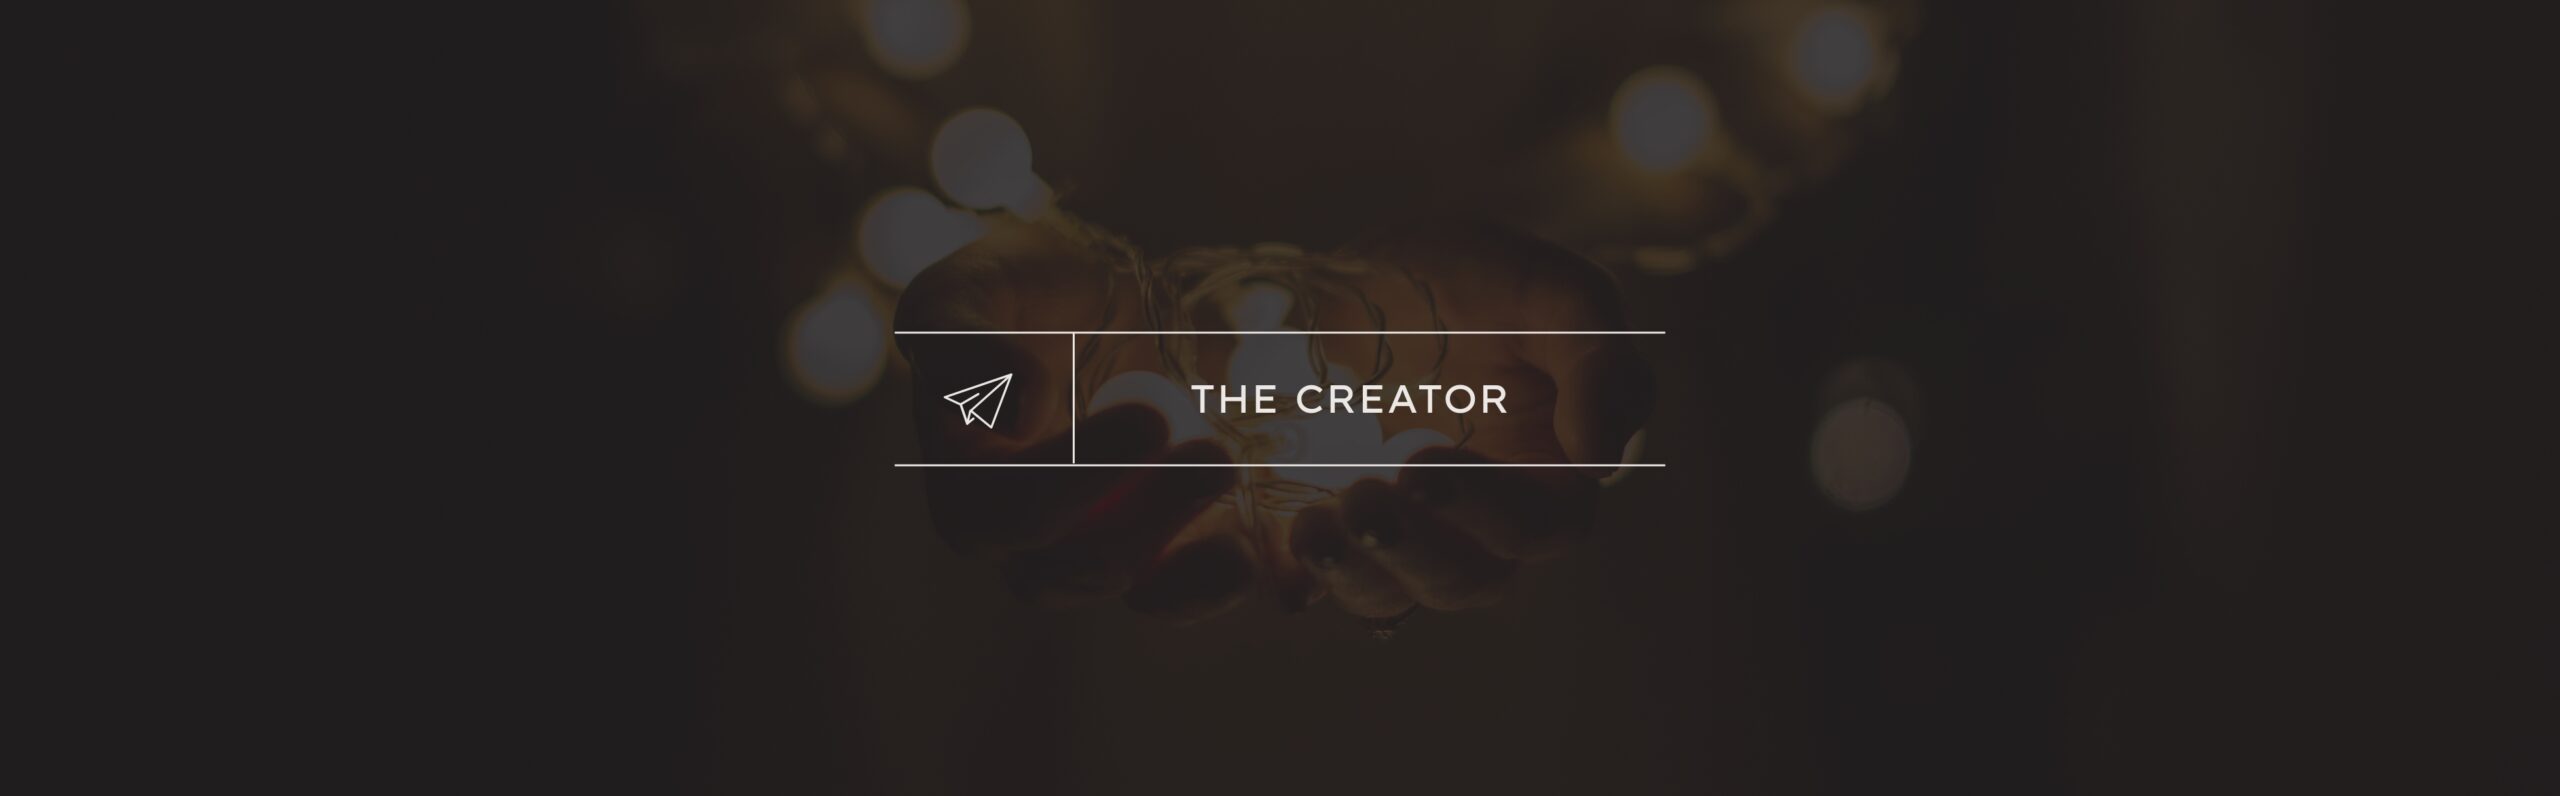 Brand Archetypes: The Creator